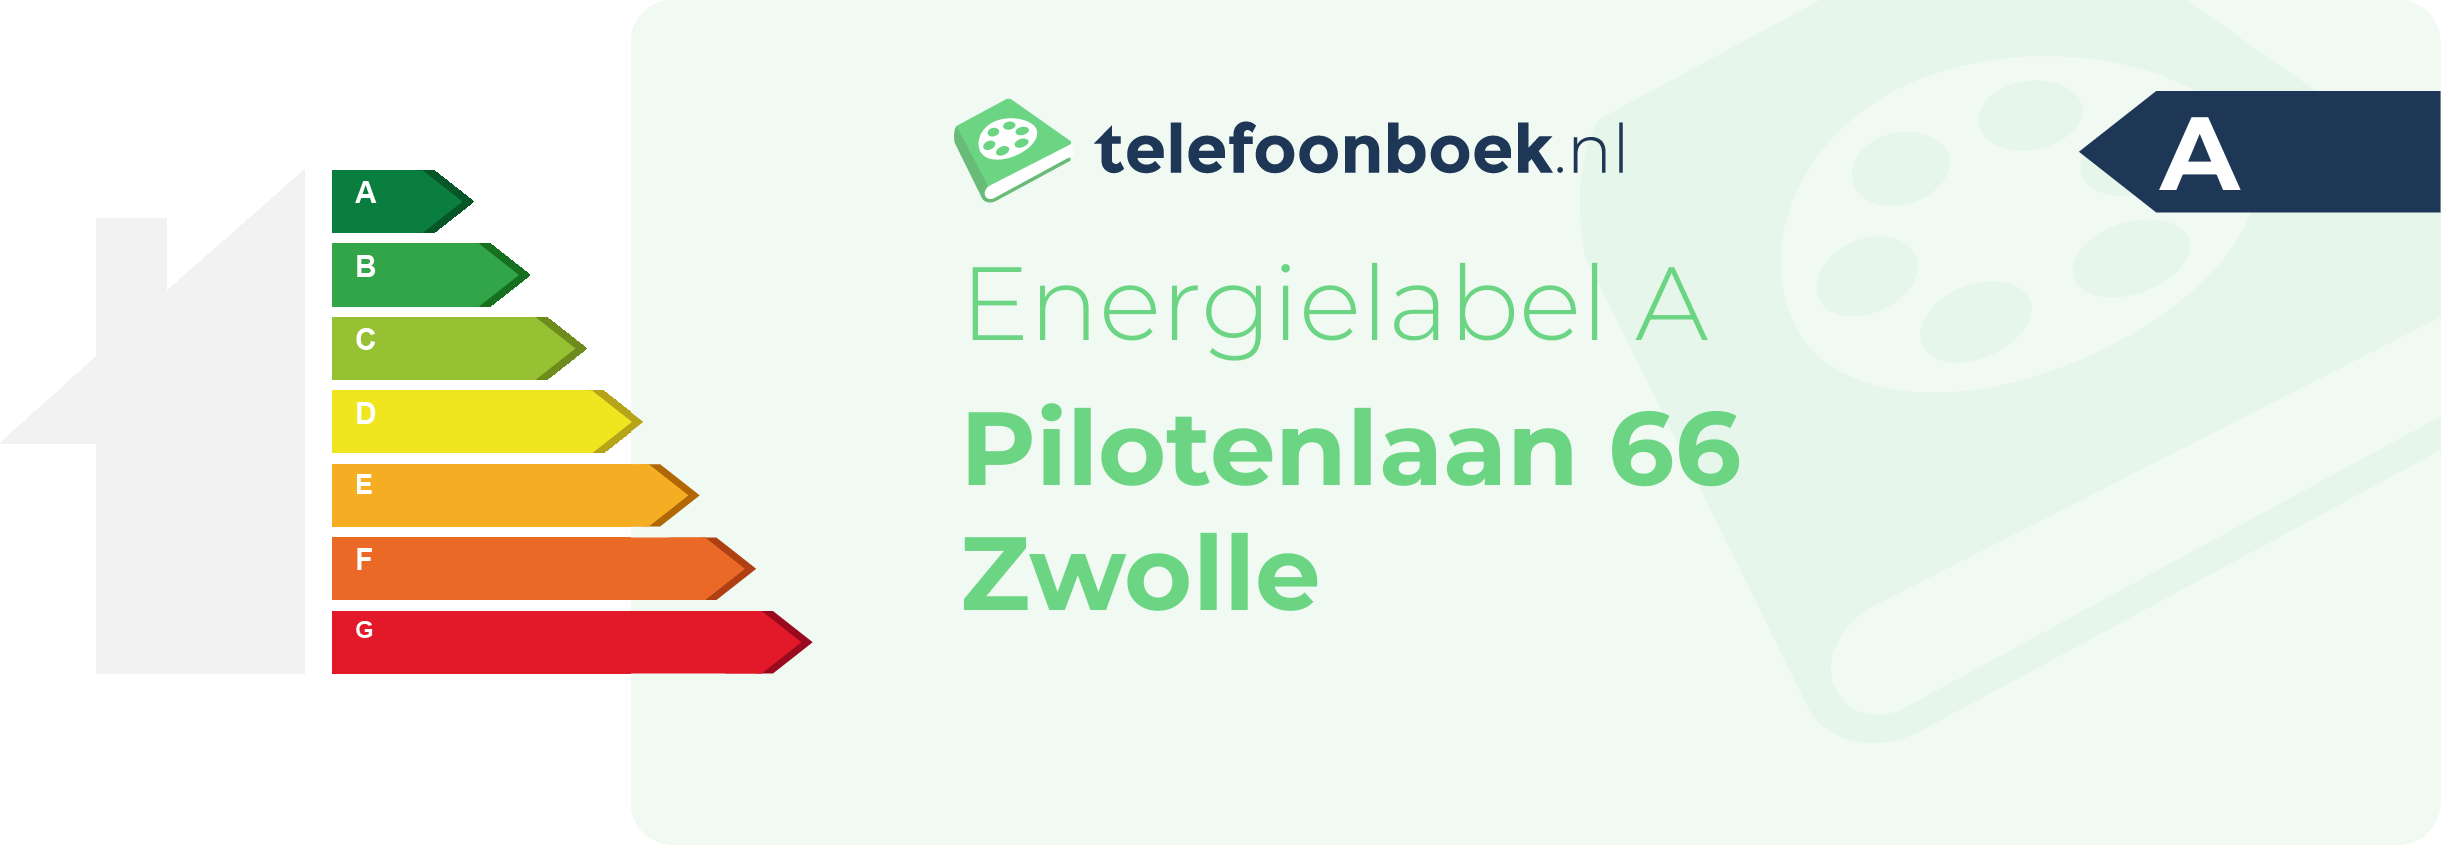 Energielabel Pilotenlaan 66 Zwolle